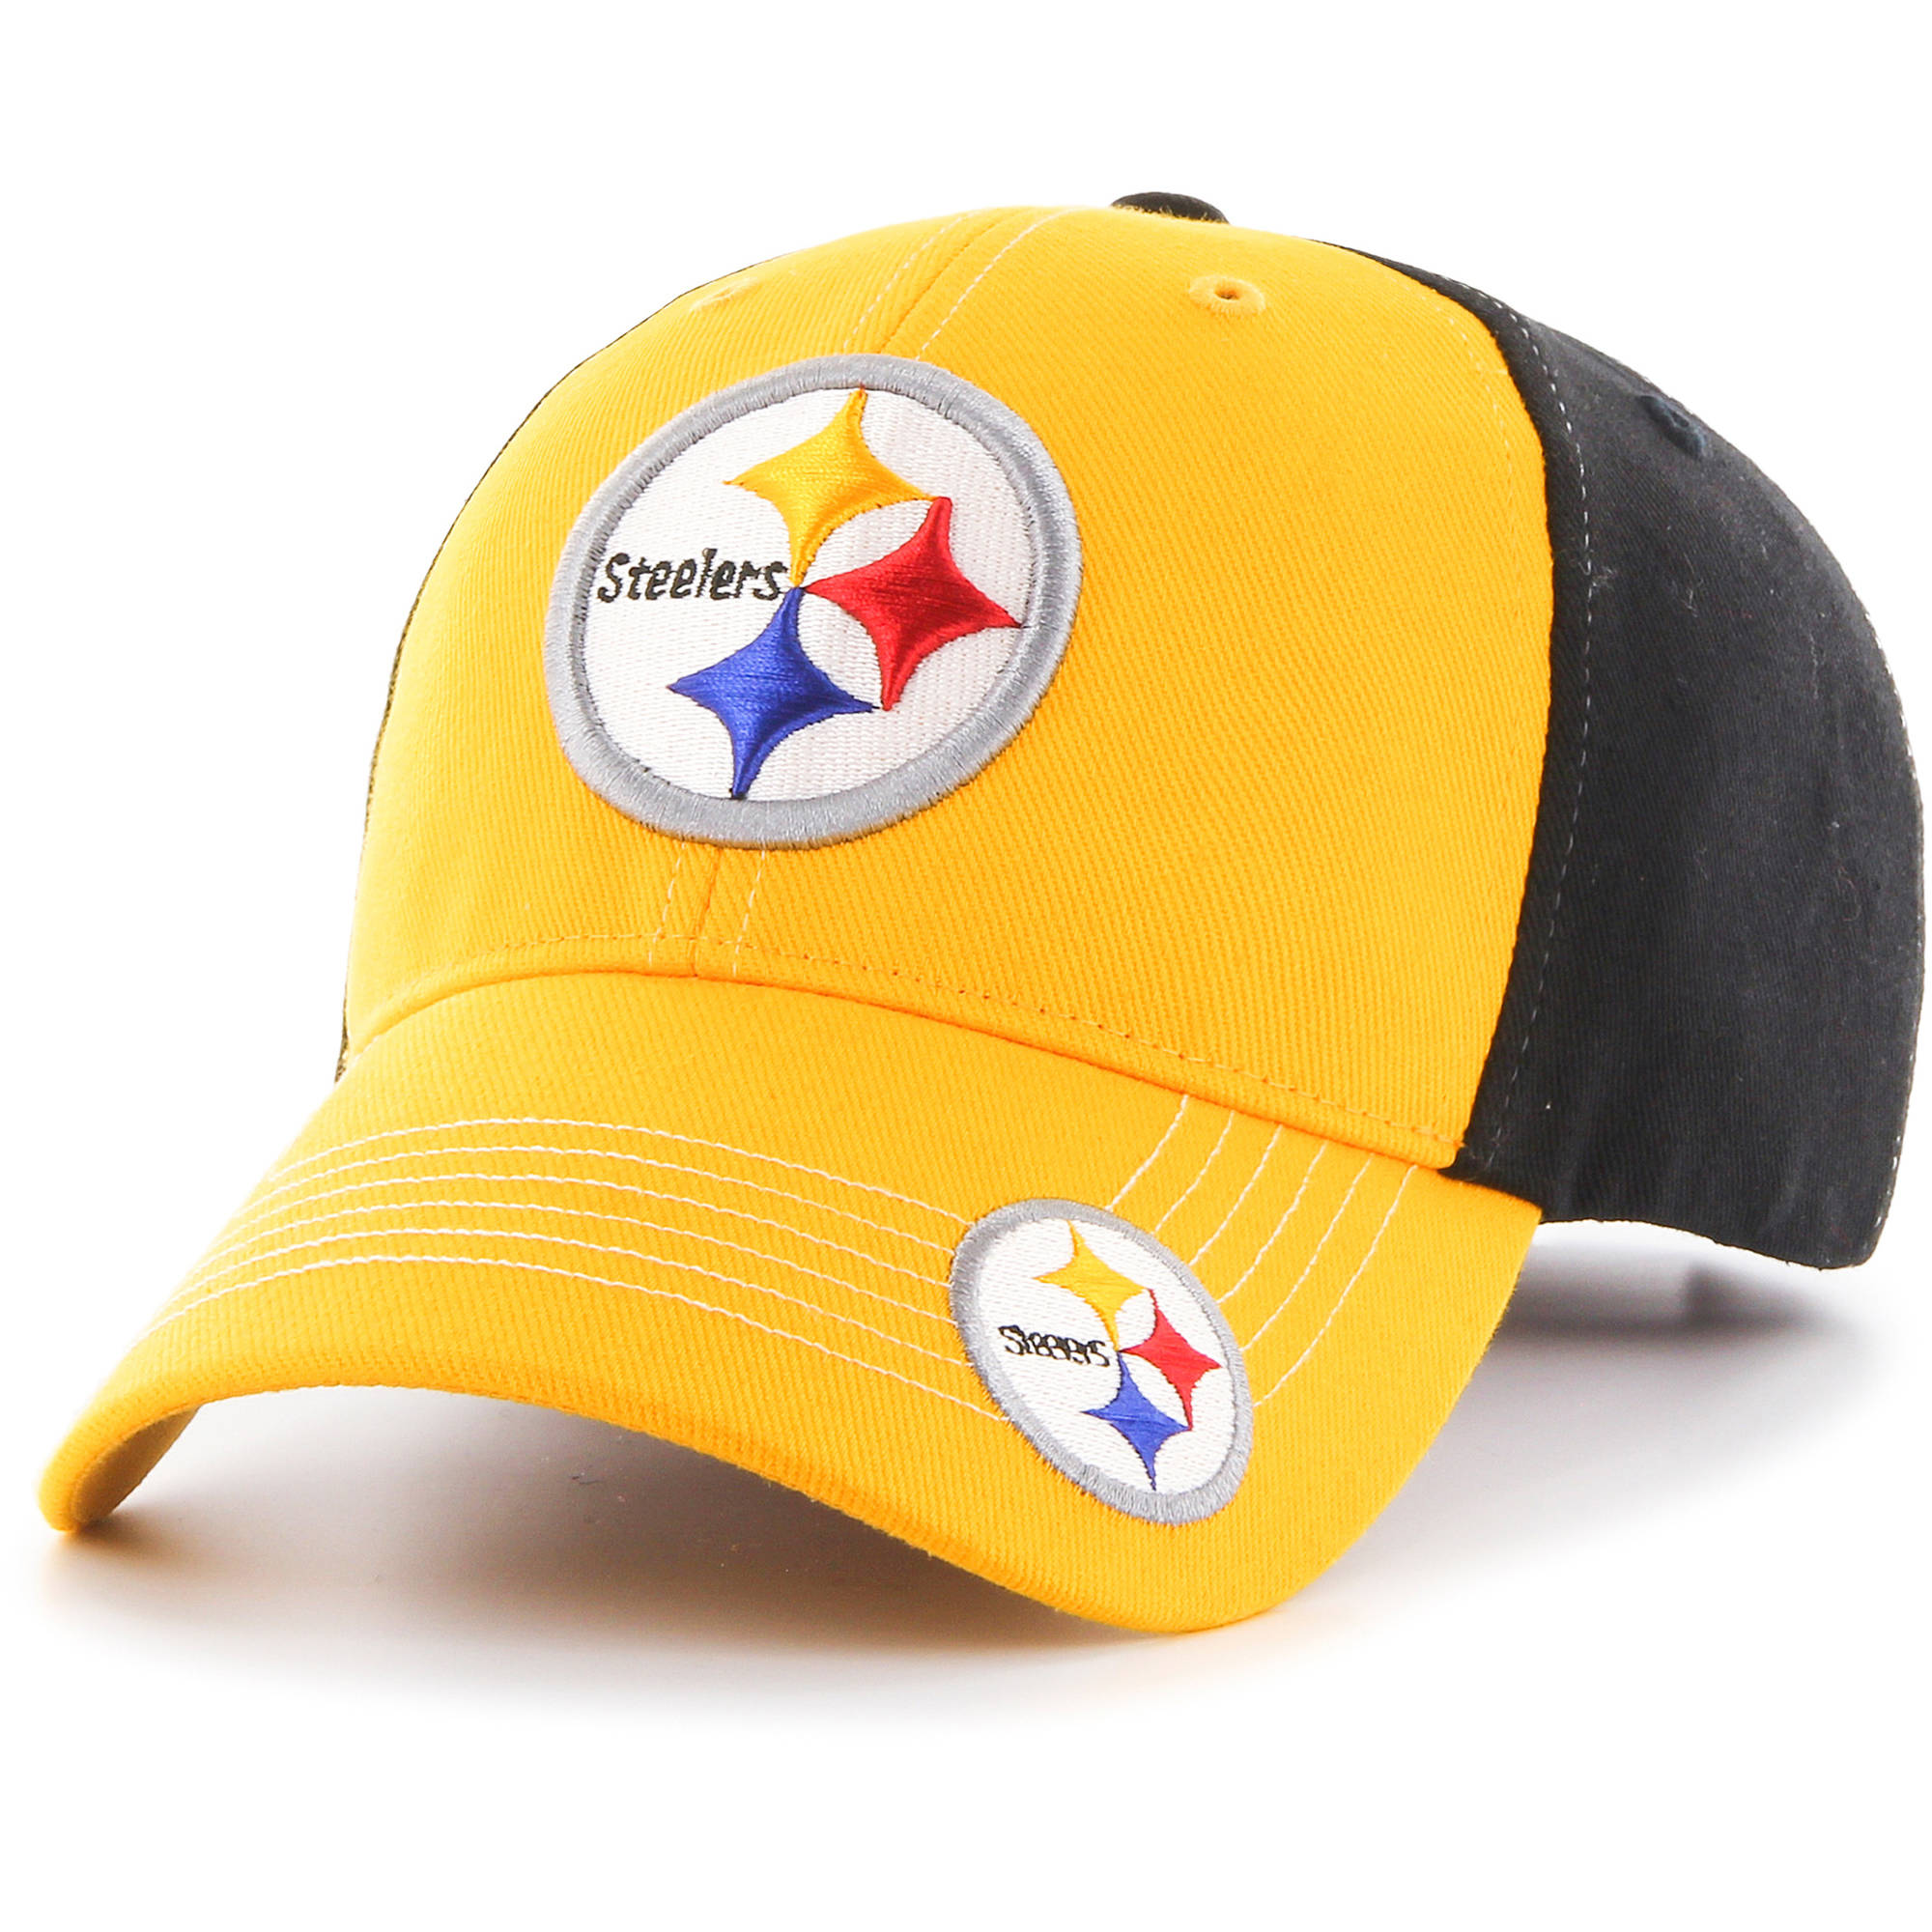 NFL Fan FavoriteRevolver Cap, Pittsburgh Steelers - image 1 of 2